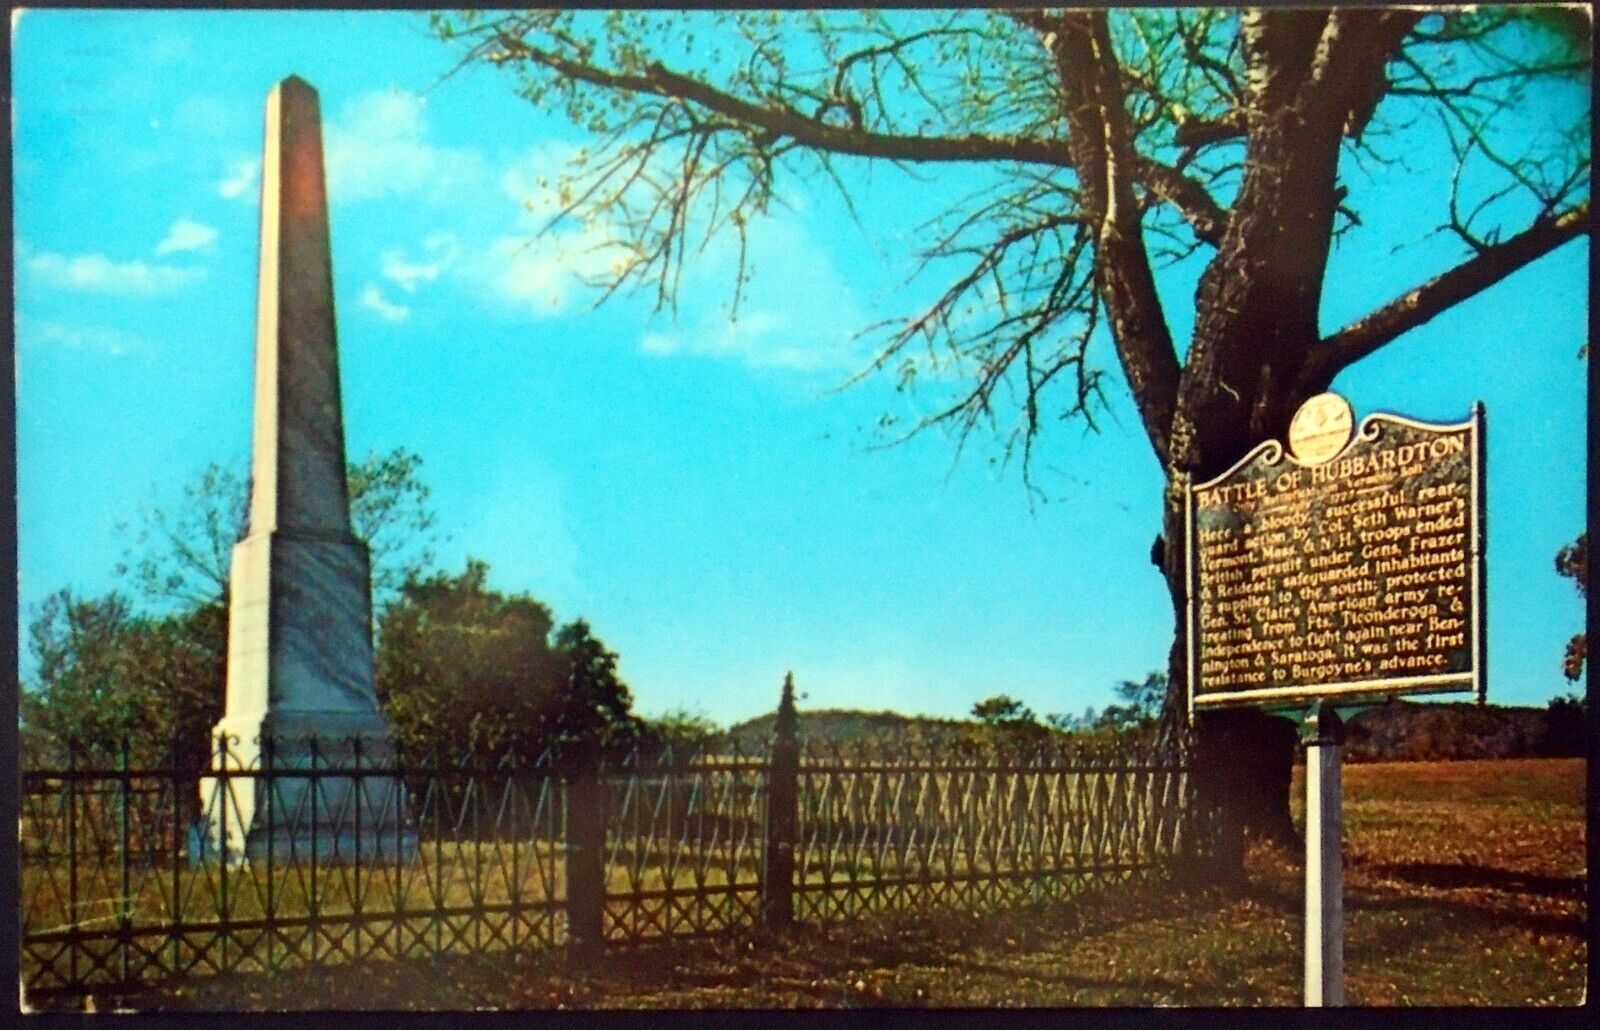 Revolutionary Battle Monument, Hubbardton, (Castleton), Vermont